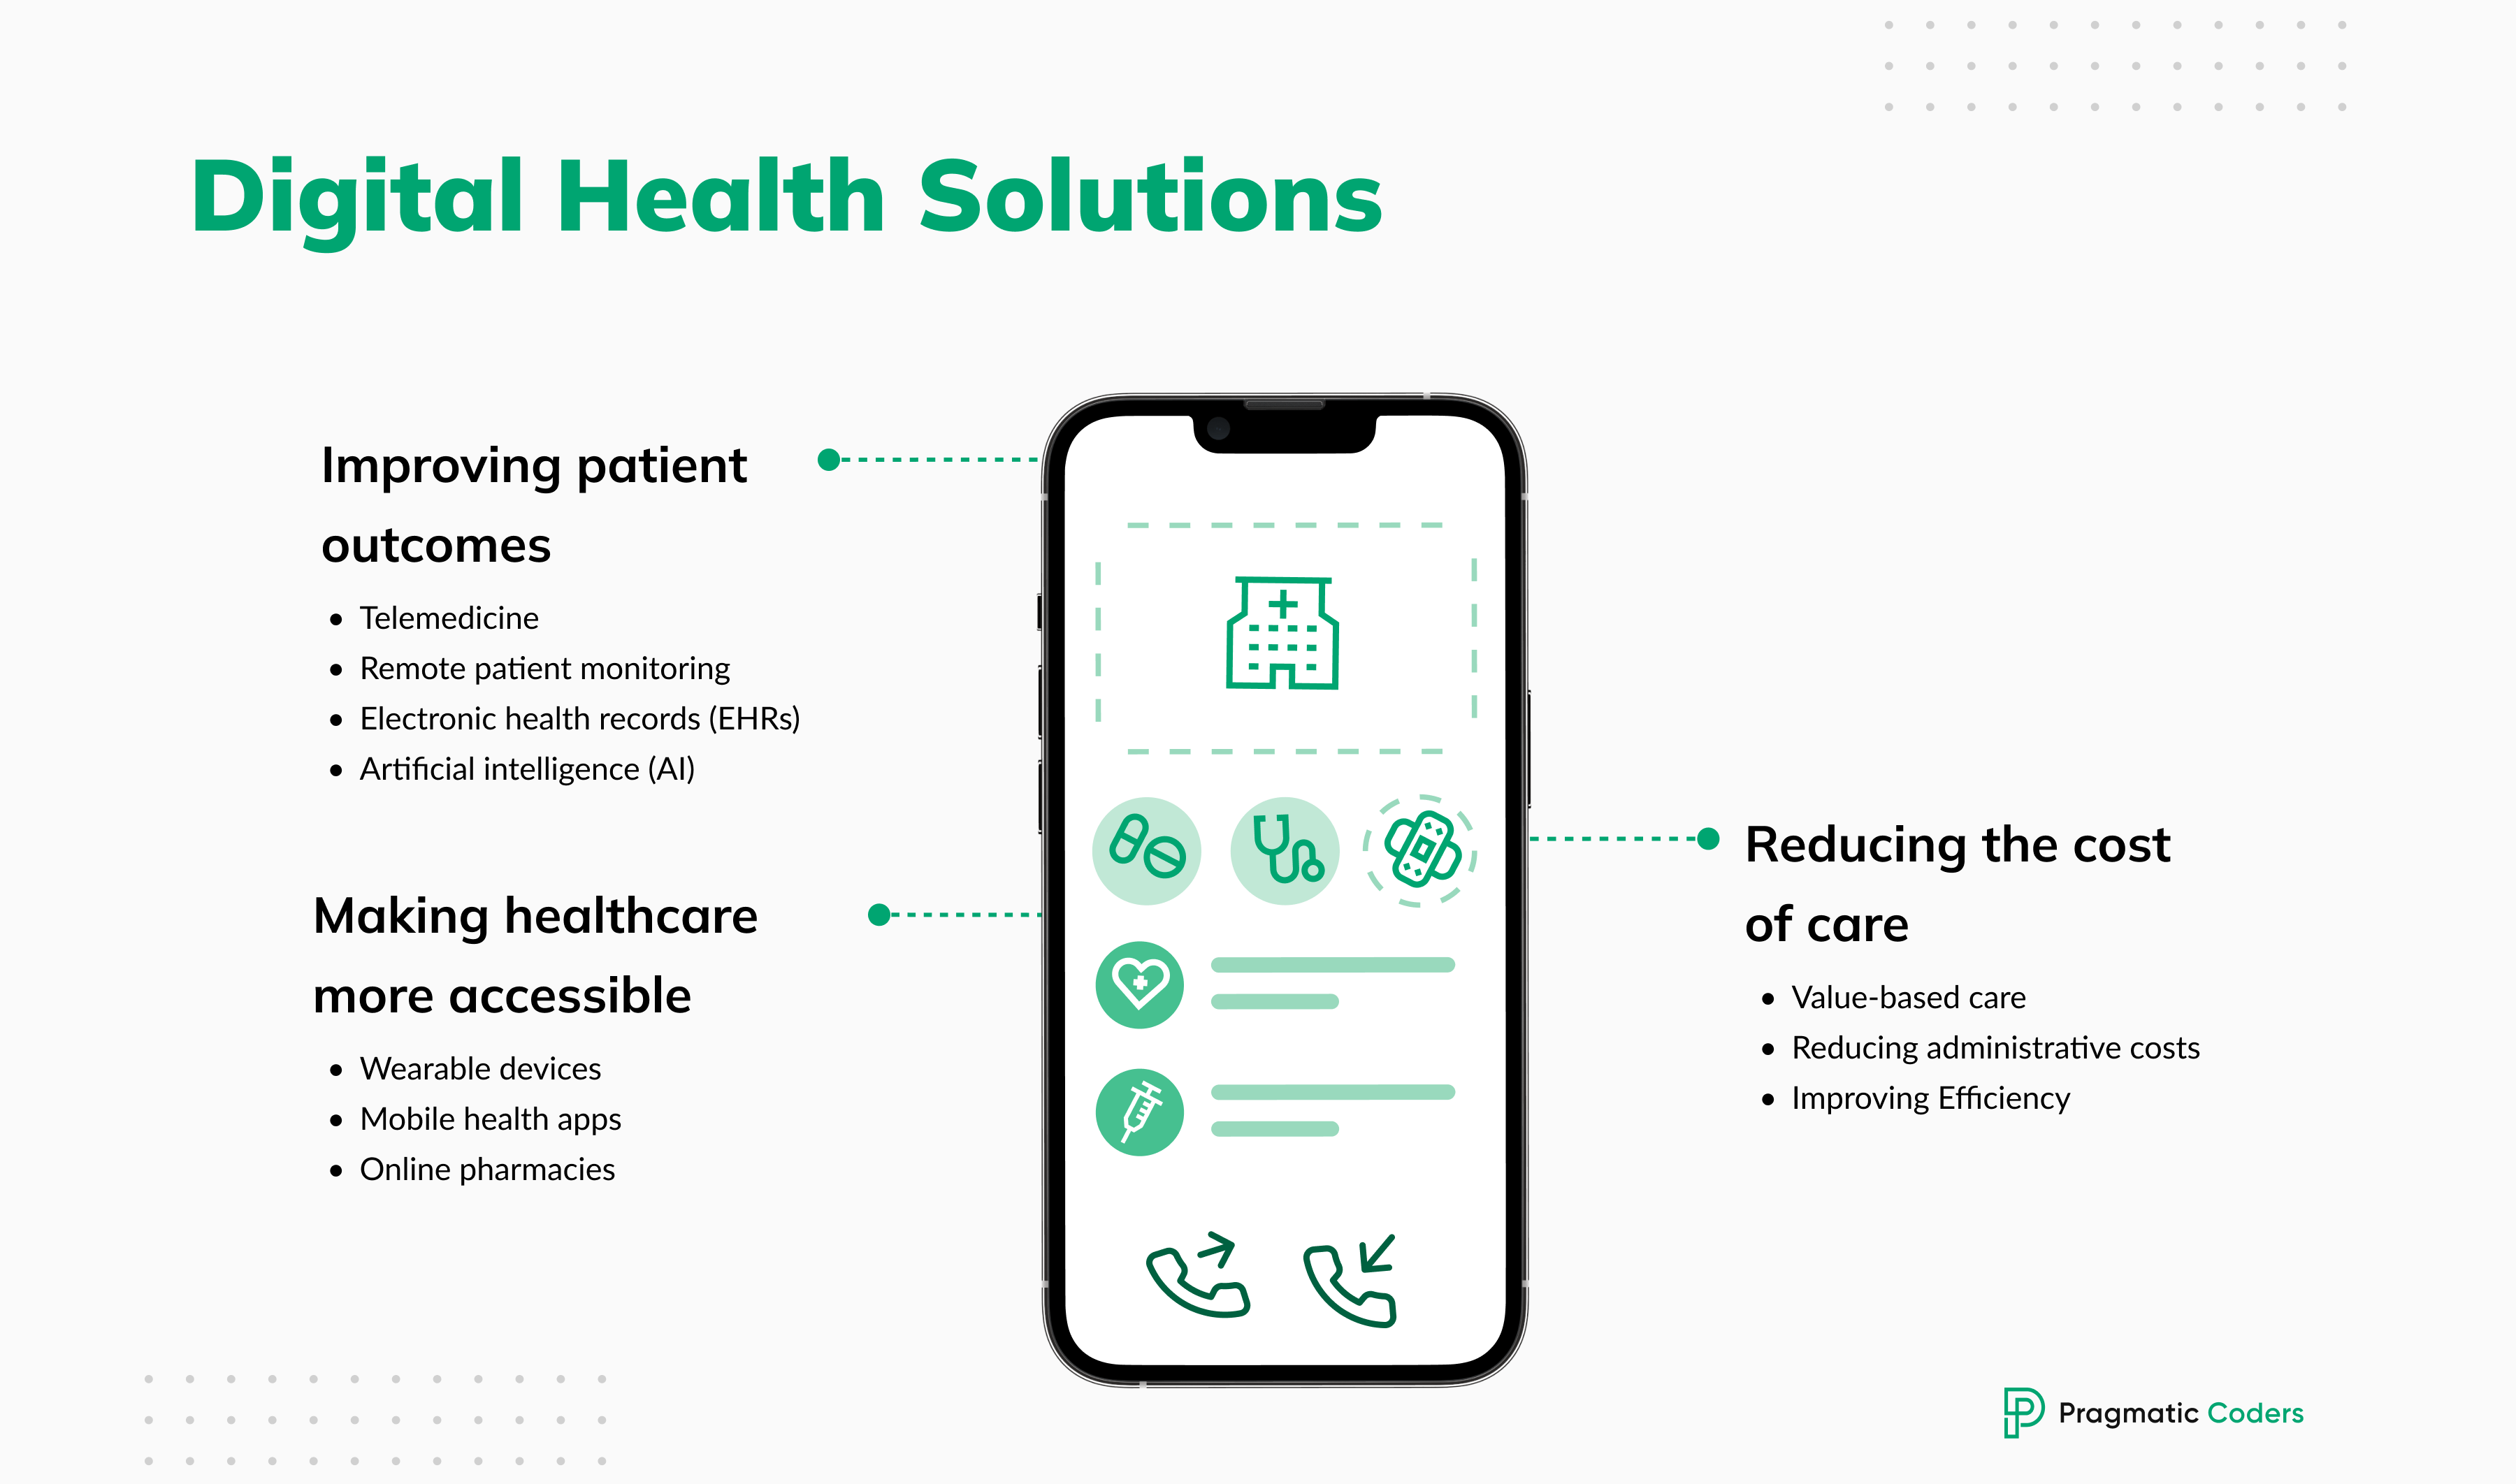 How digital health solutions improve healthcare